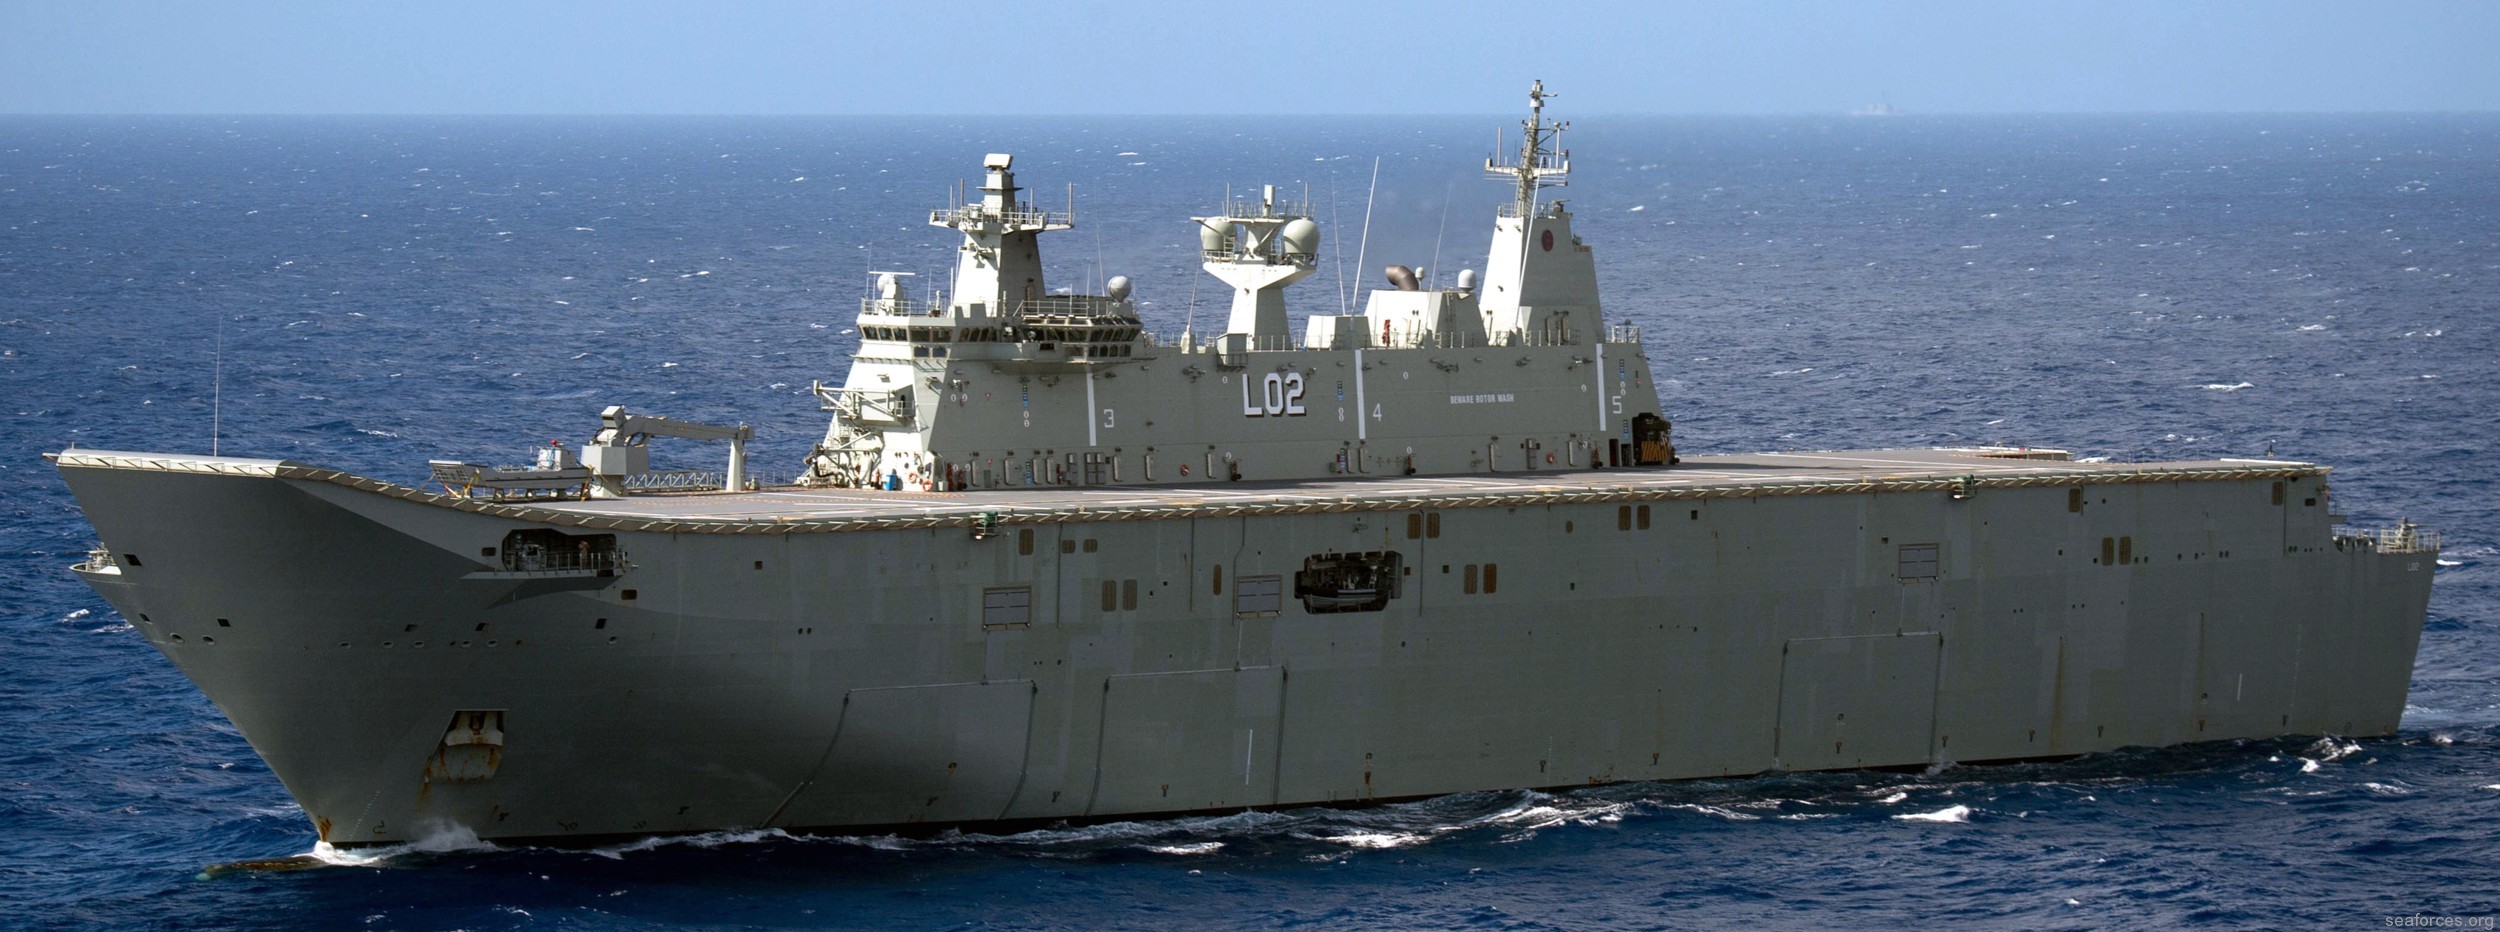 l-01 hmas canberra amphibious landing ship helicopter dock lhd royal australian navy 2016 22